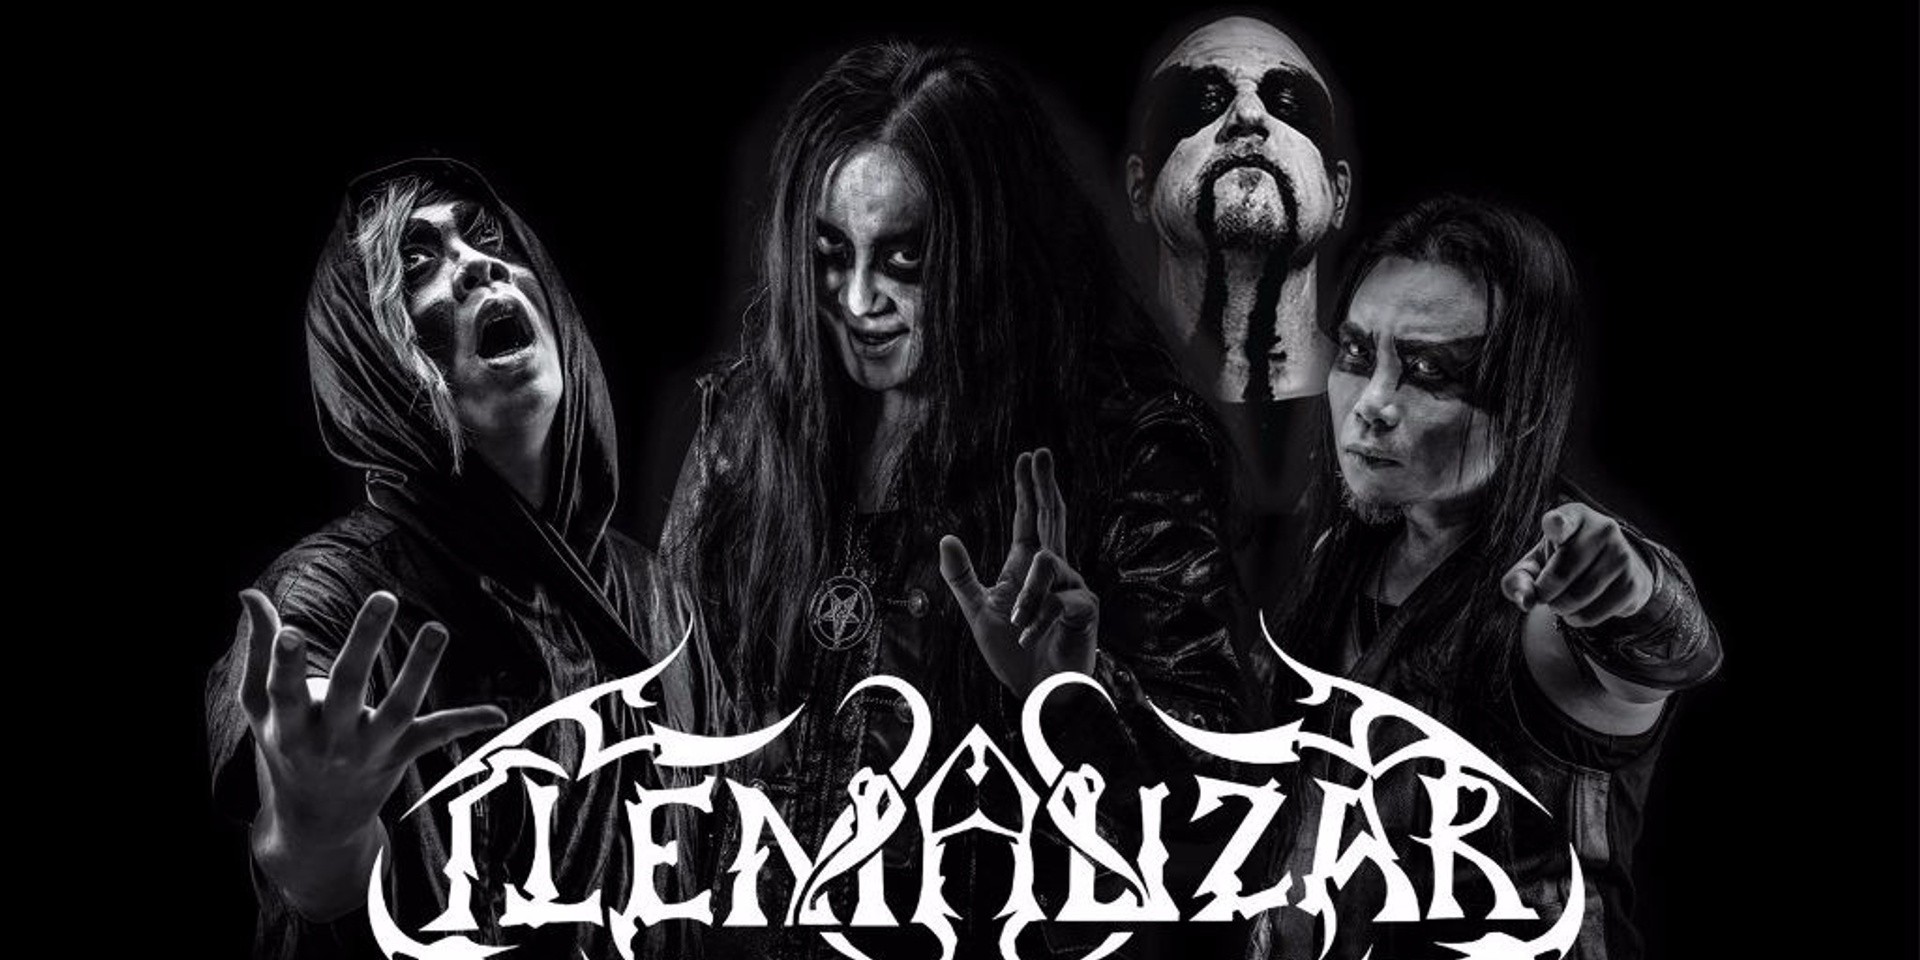 LISTEN: Black metal veterans Ilemauzar release first LP in 20 years